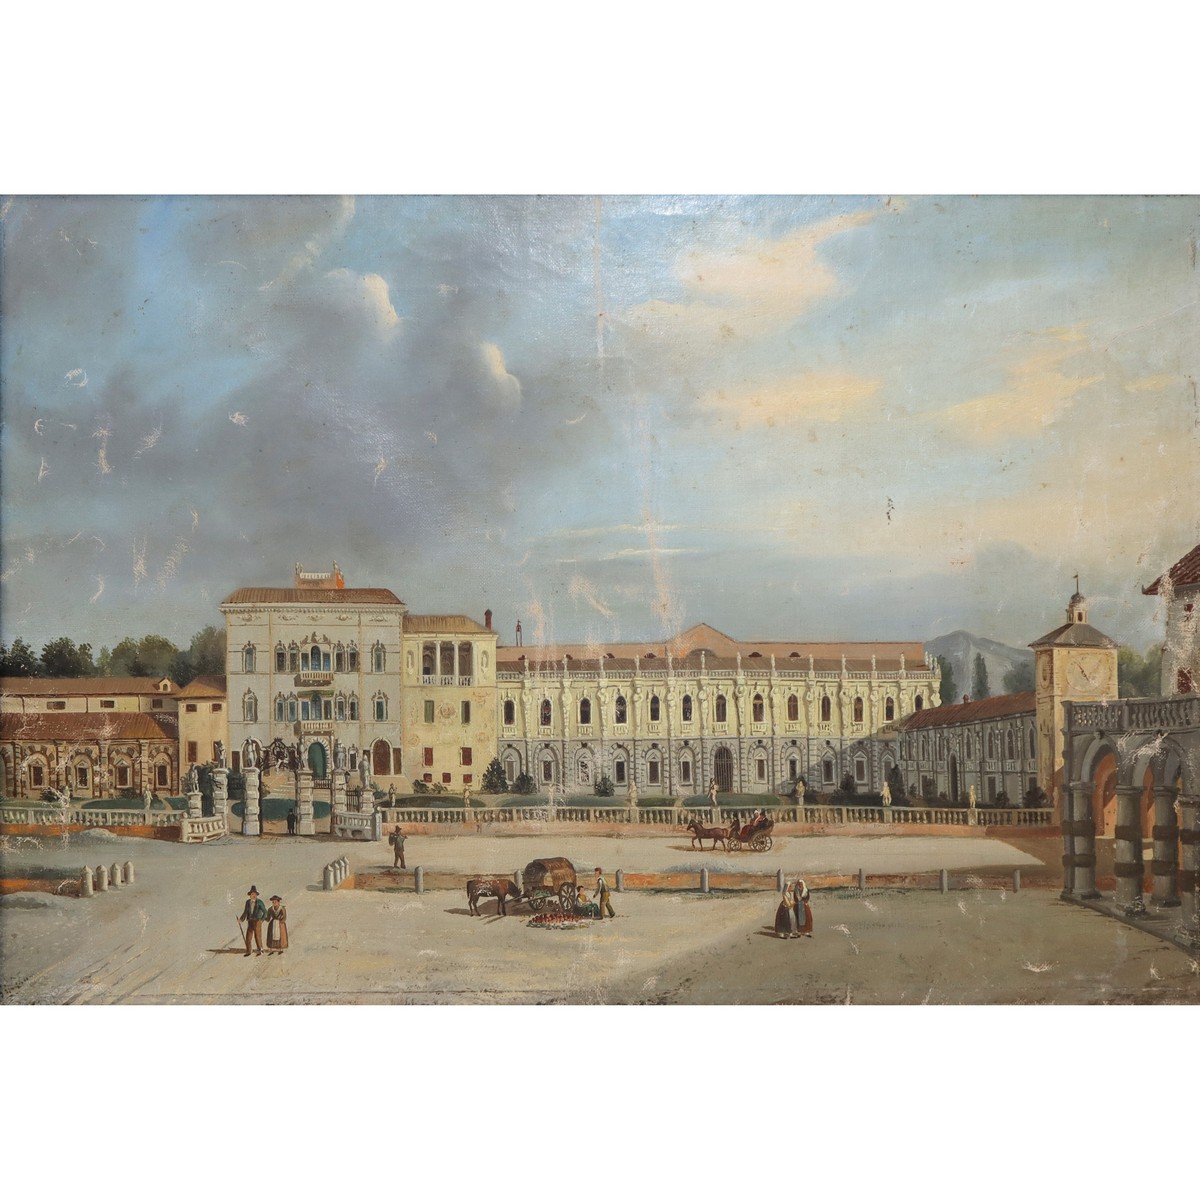 Elevation of Villa Contarini - Camerini in Piazzola sul Brenta (Padua), nineteenth century - Image 2 of 4